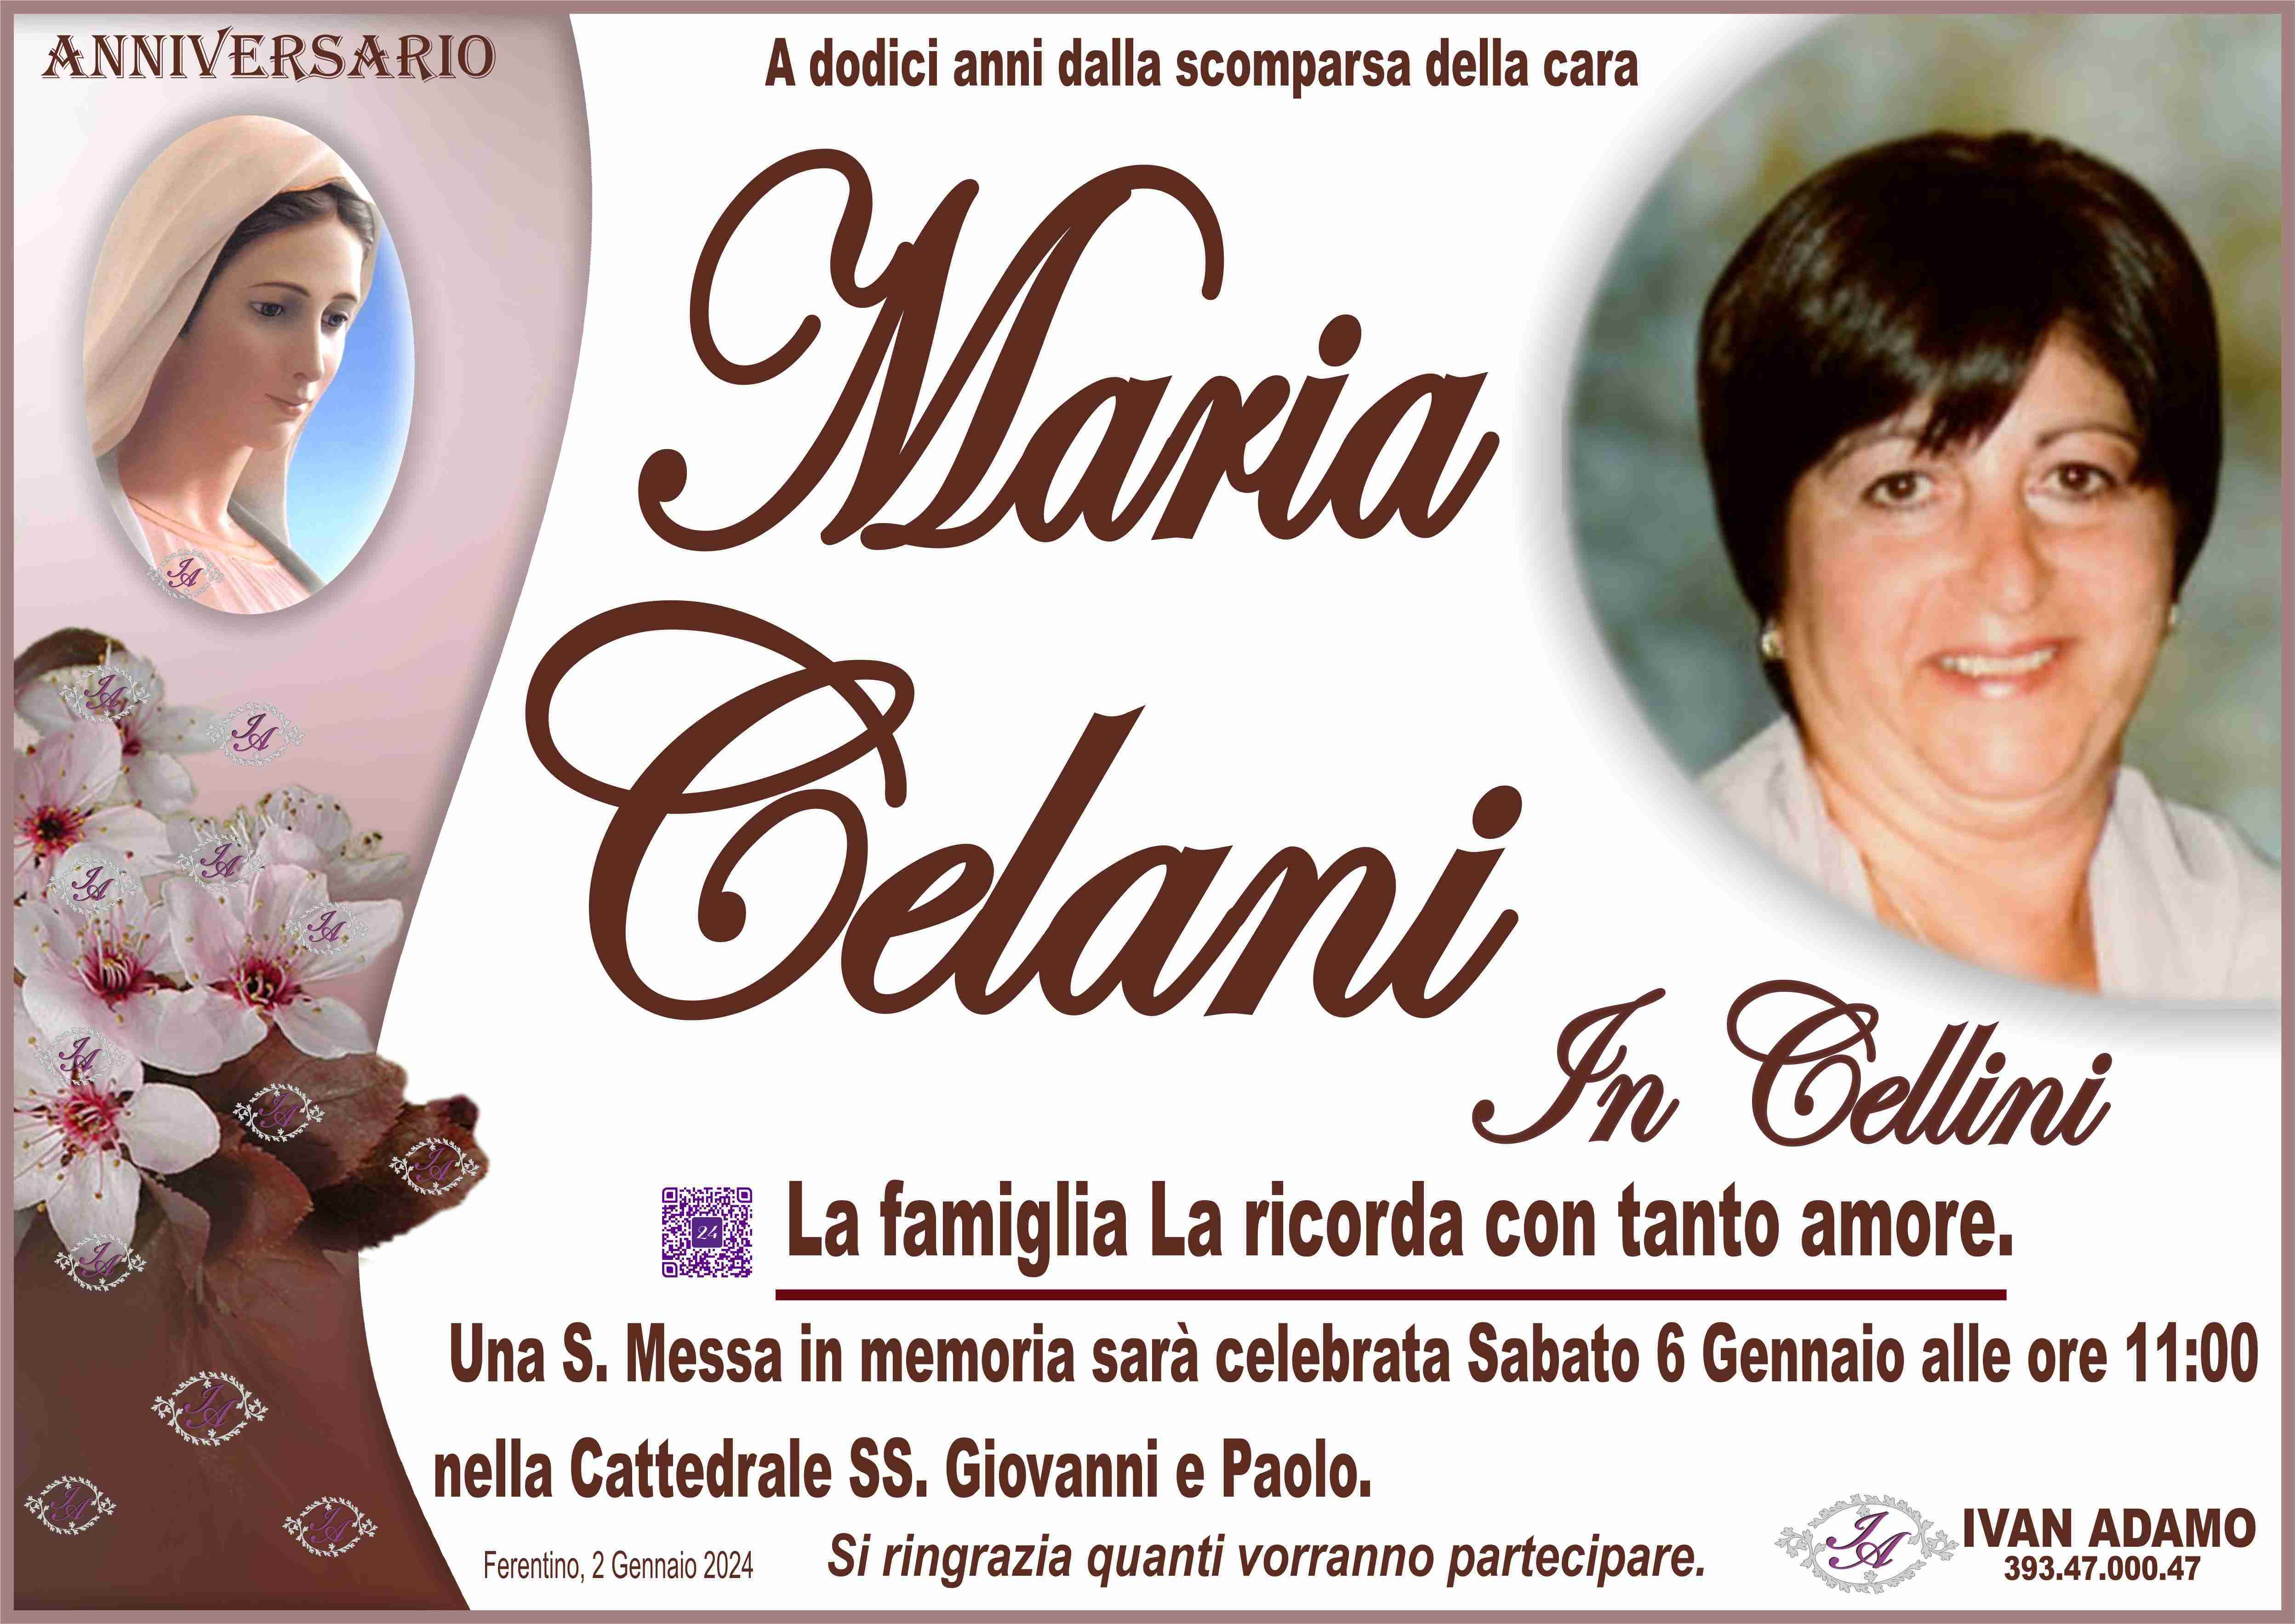 Maria Celani